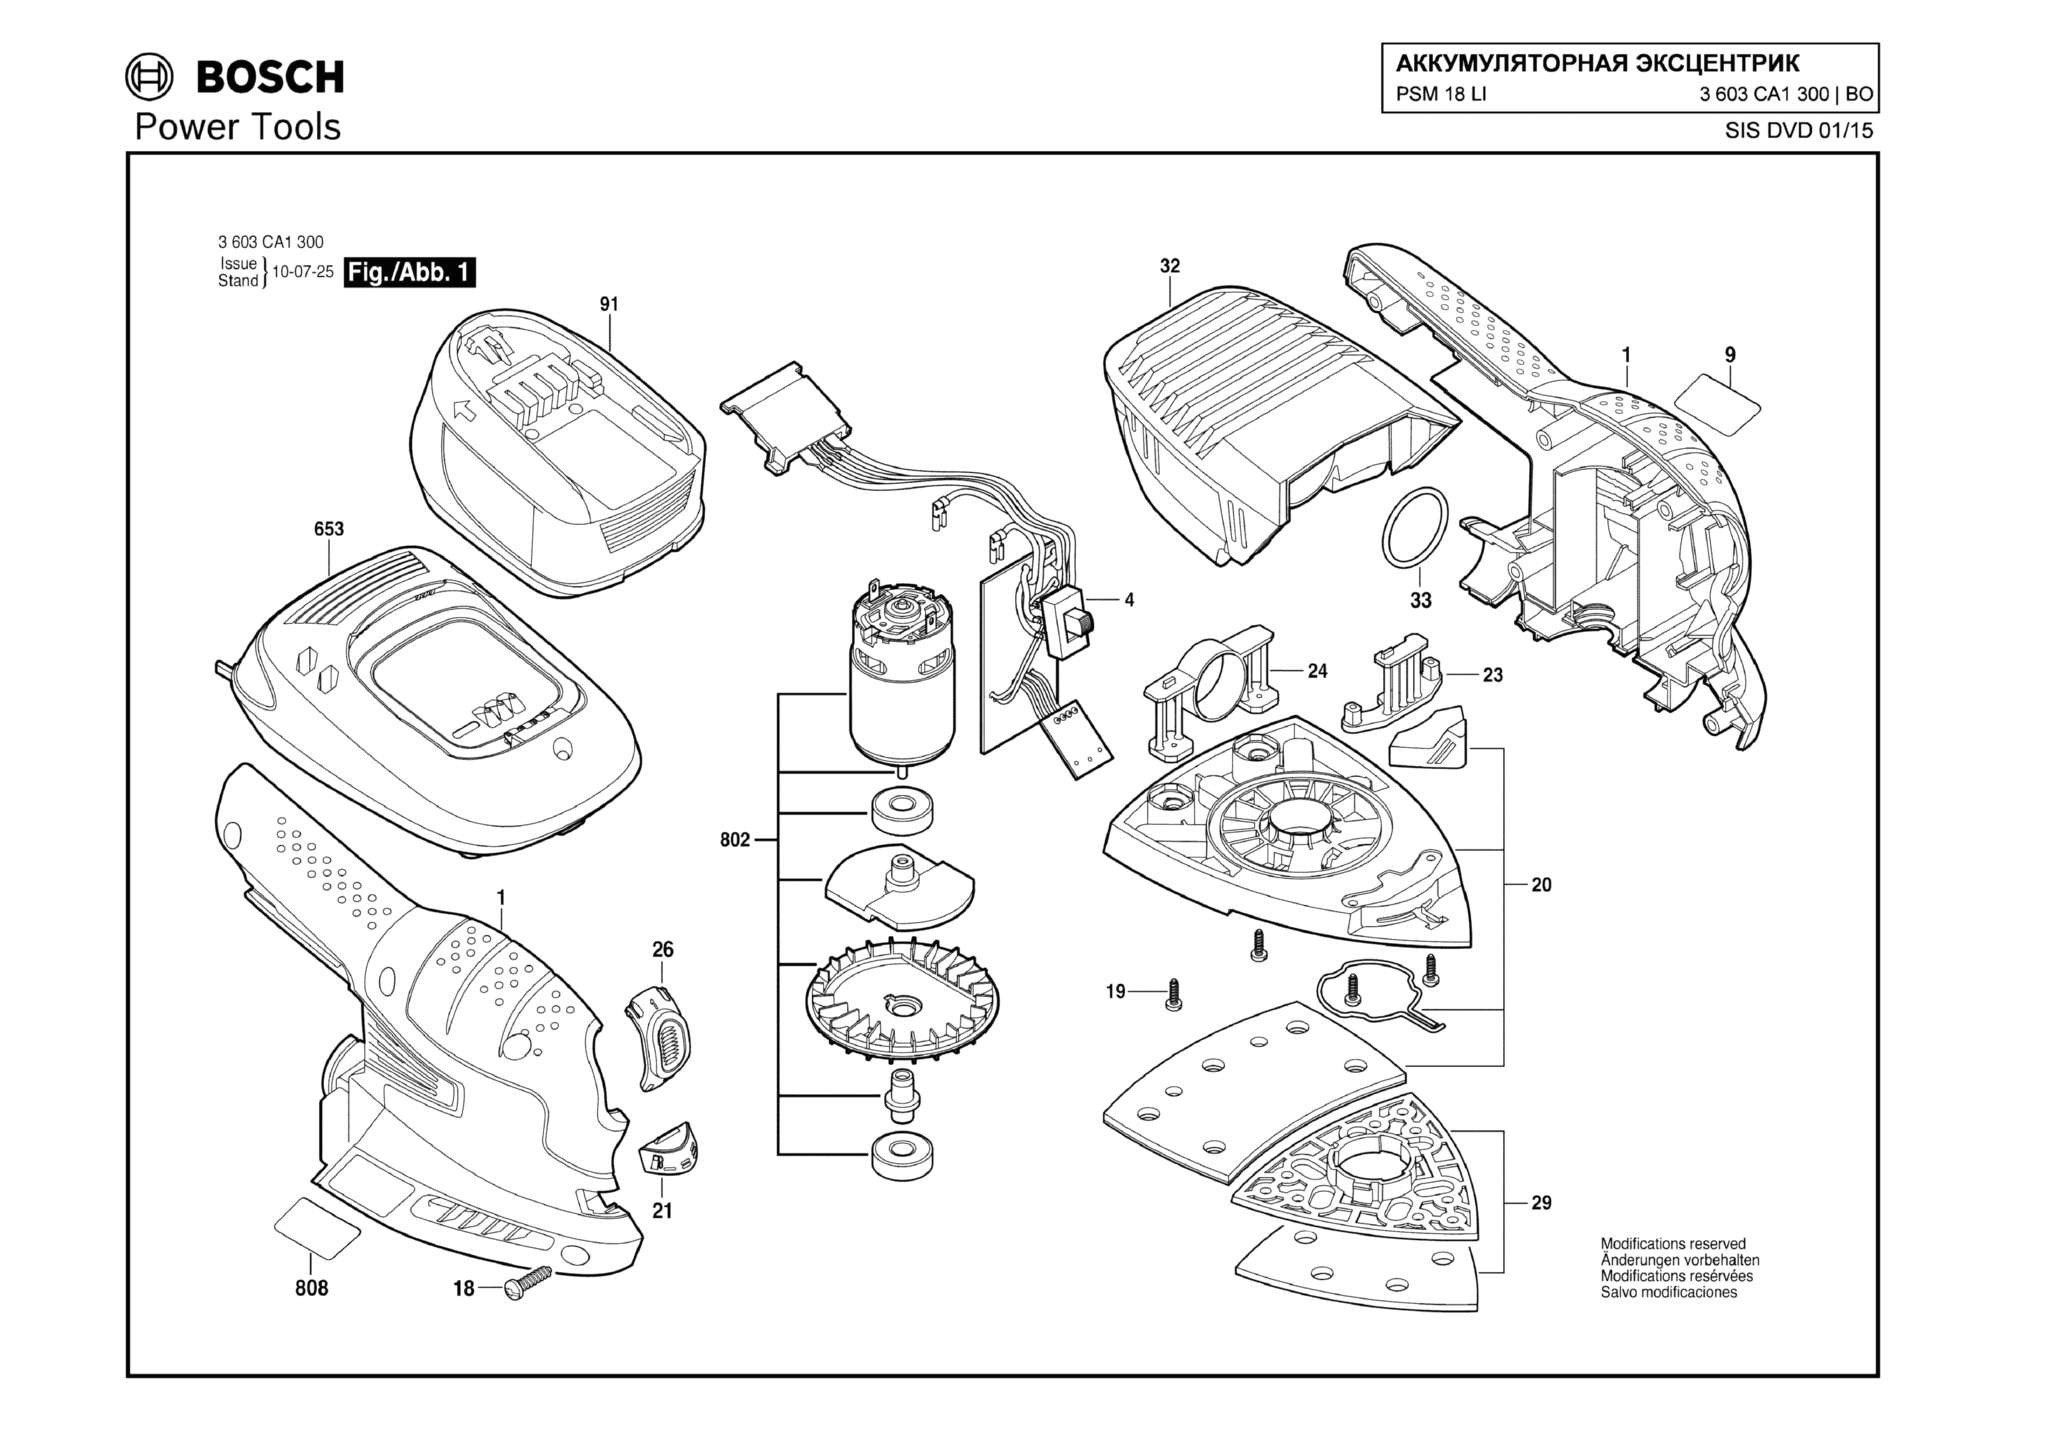 Запчасти, схема и деталировка Bosch PSM 18 LI (ТИП 3603CA1300)